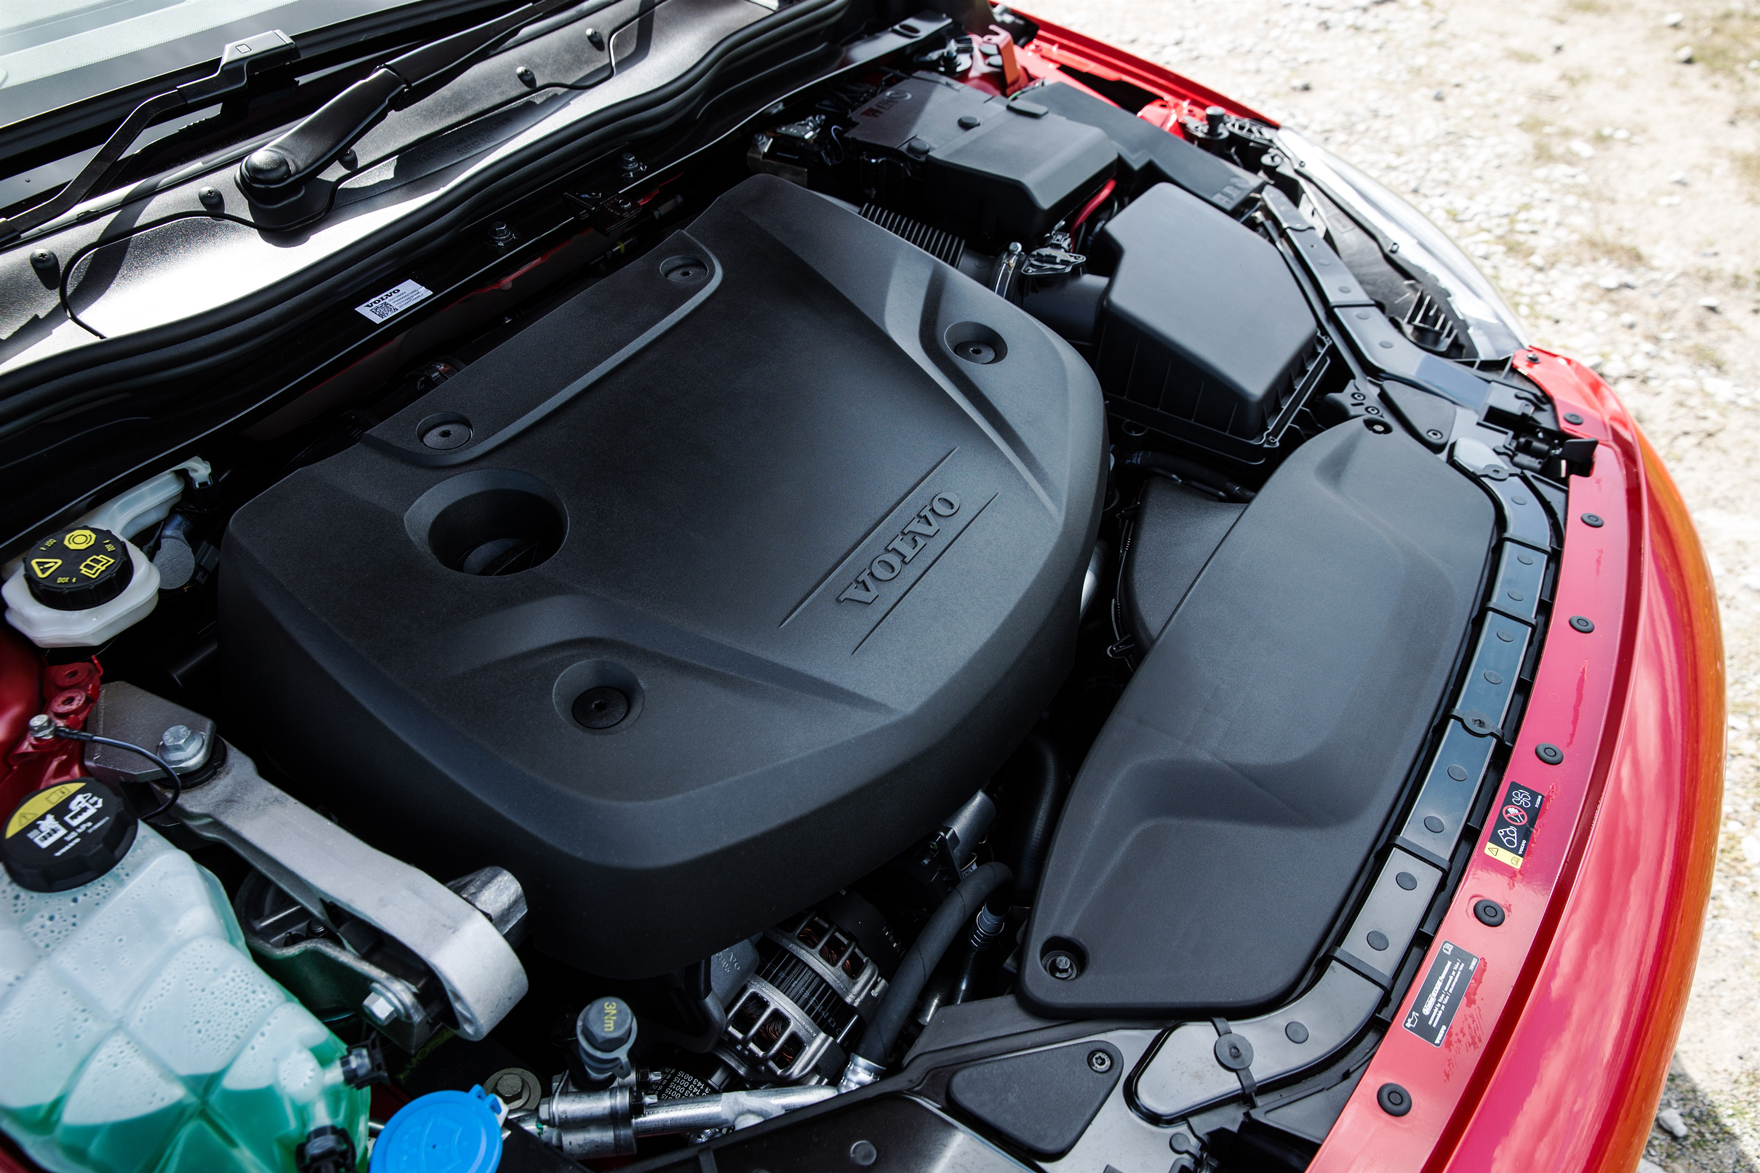 2.0-litre Volvo V40 diesel engine